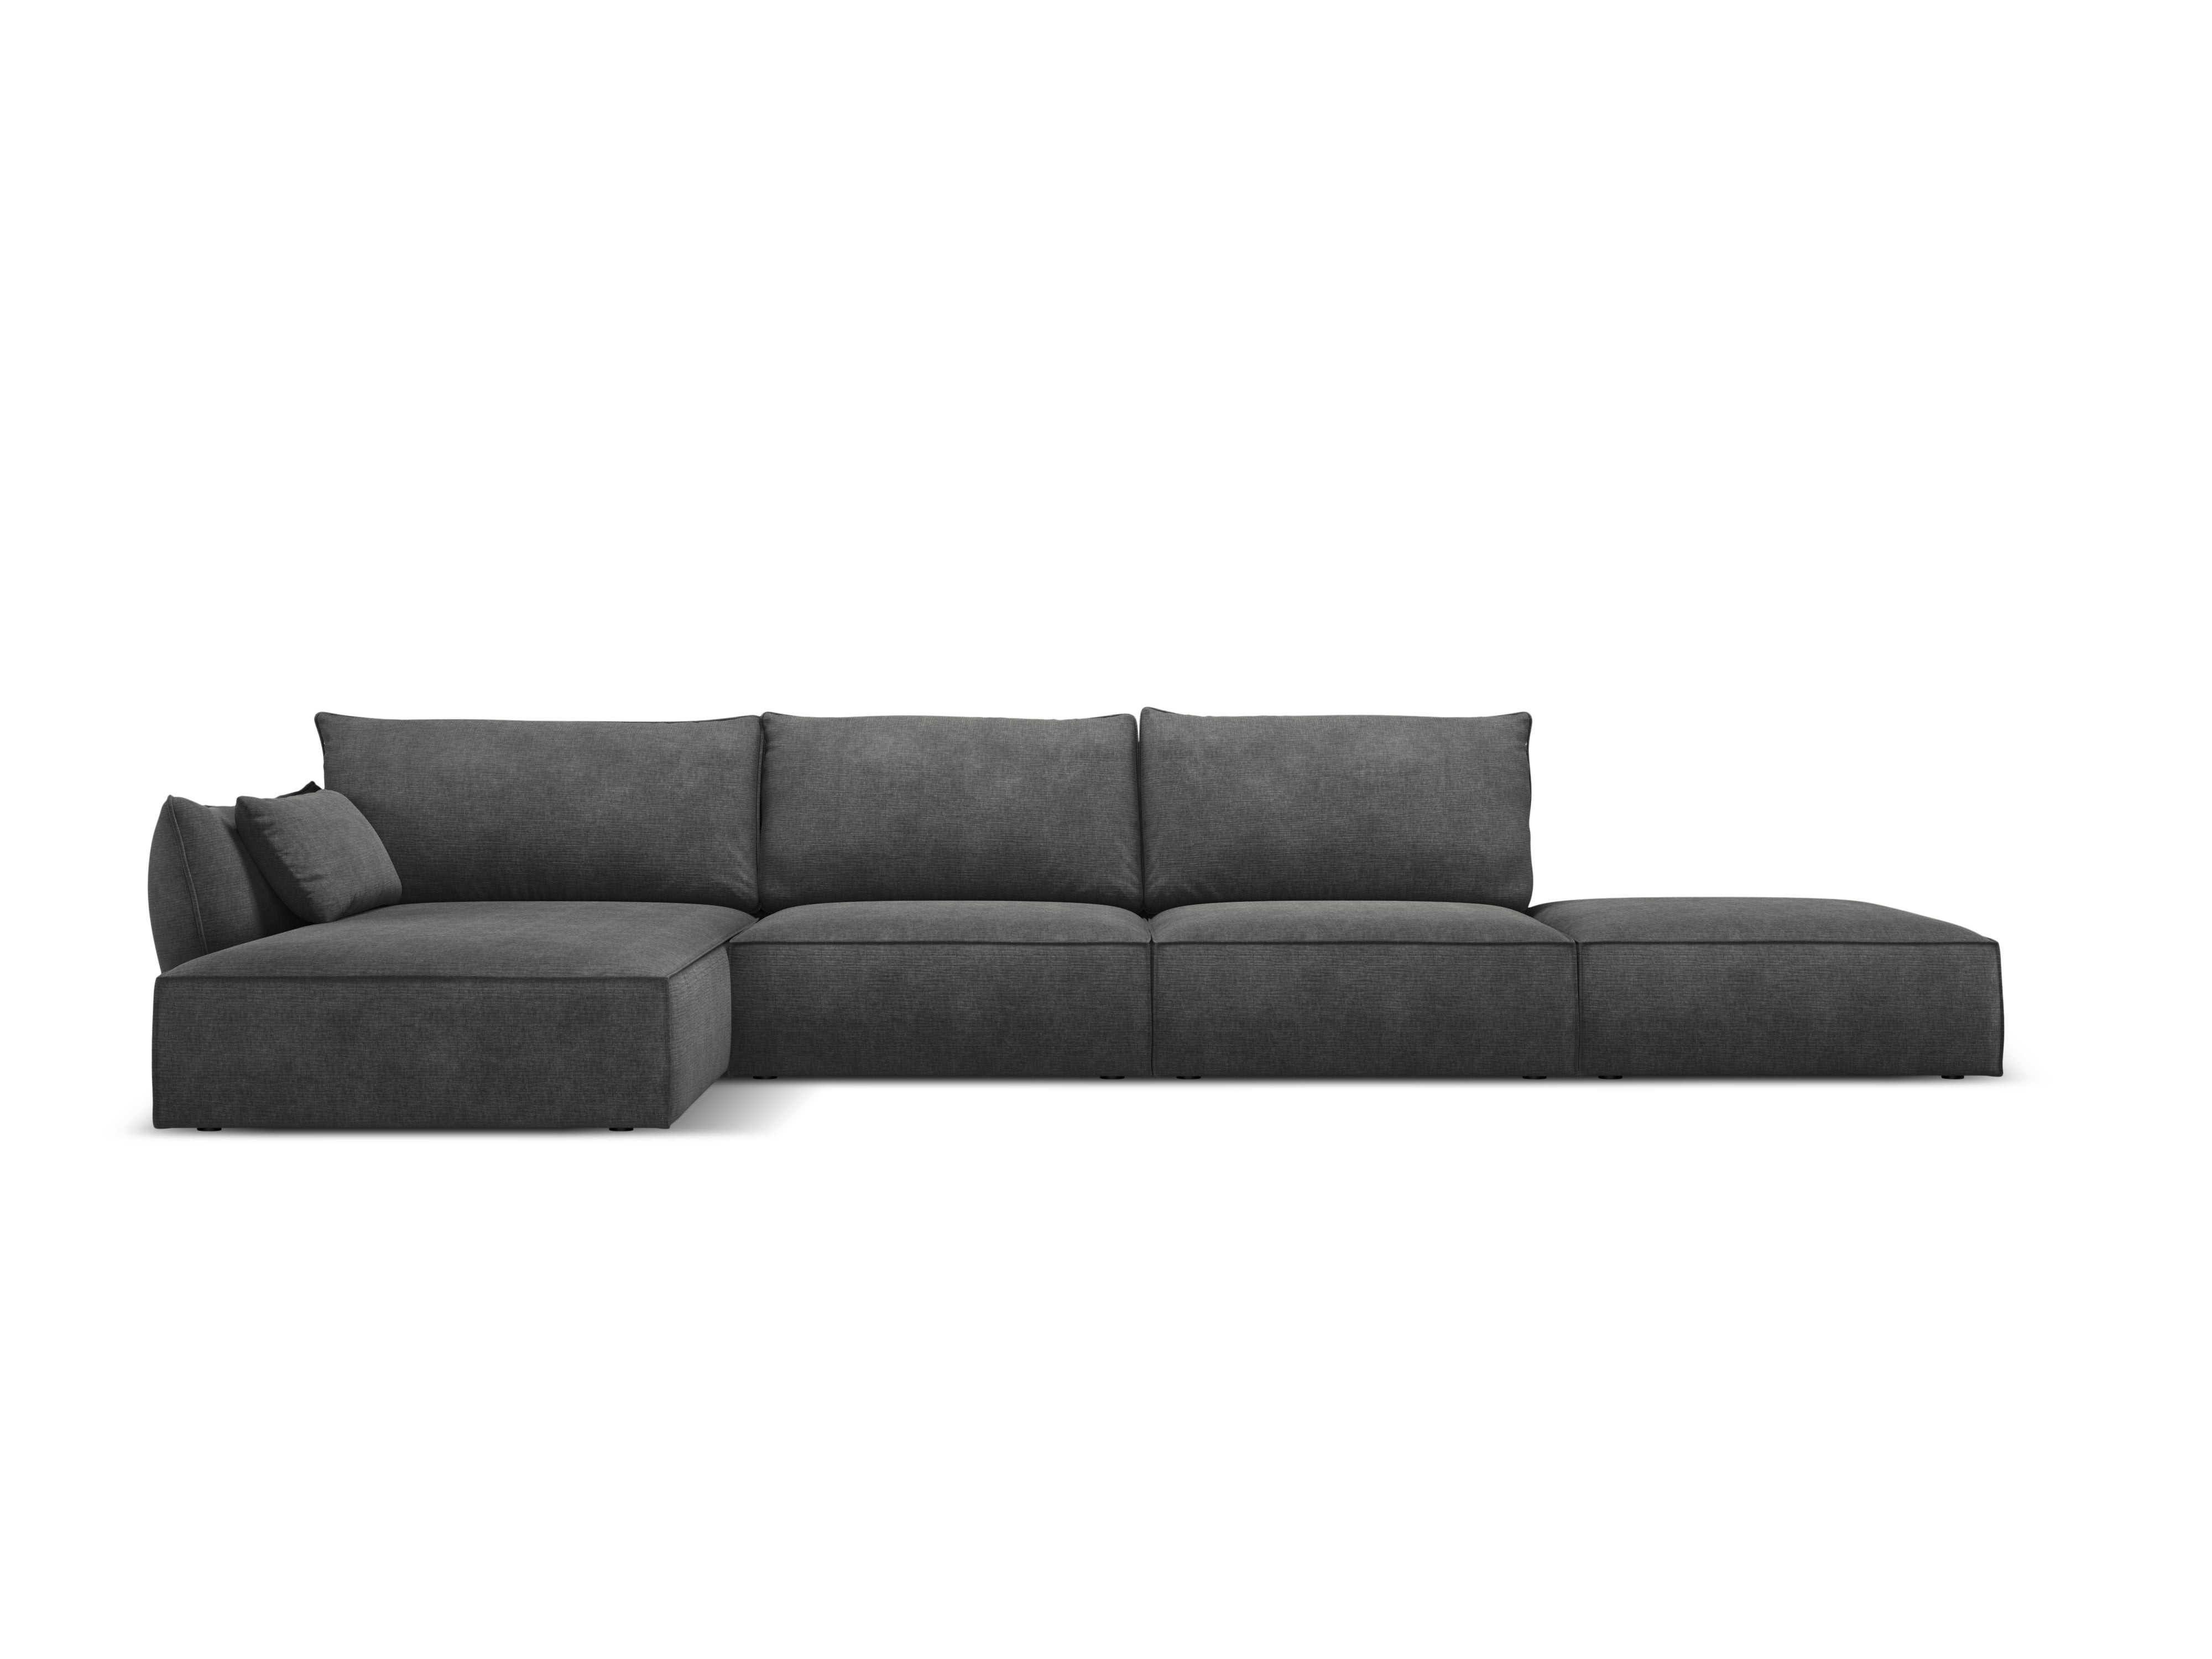 Left Corner Sofa, "Vanda", 5 Seats, 386x166x85
Made in Europe, Mazzini Sofas, Eye on Design